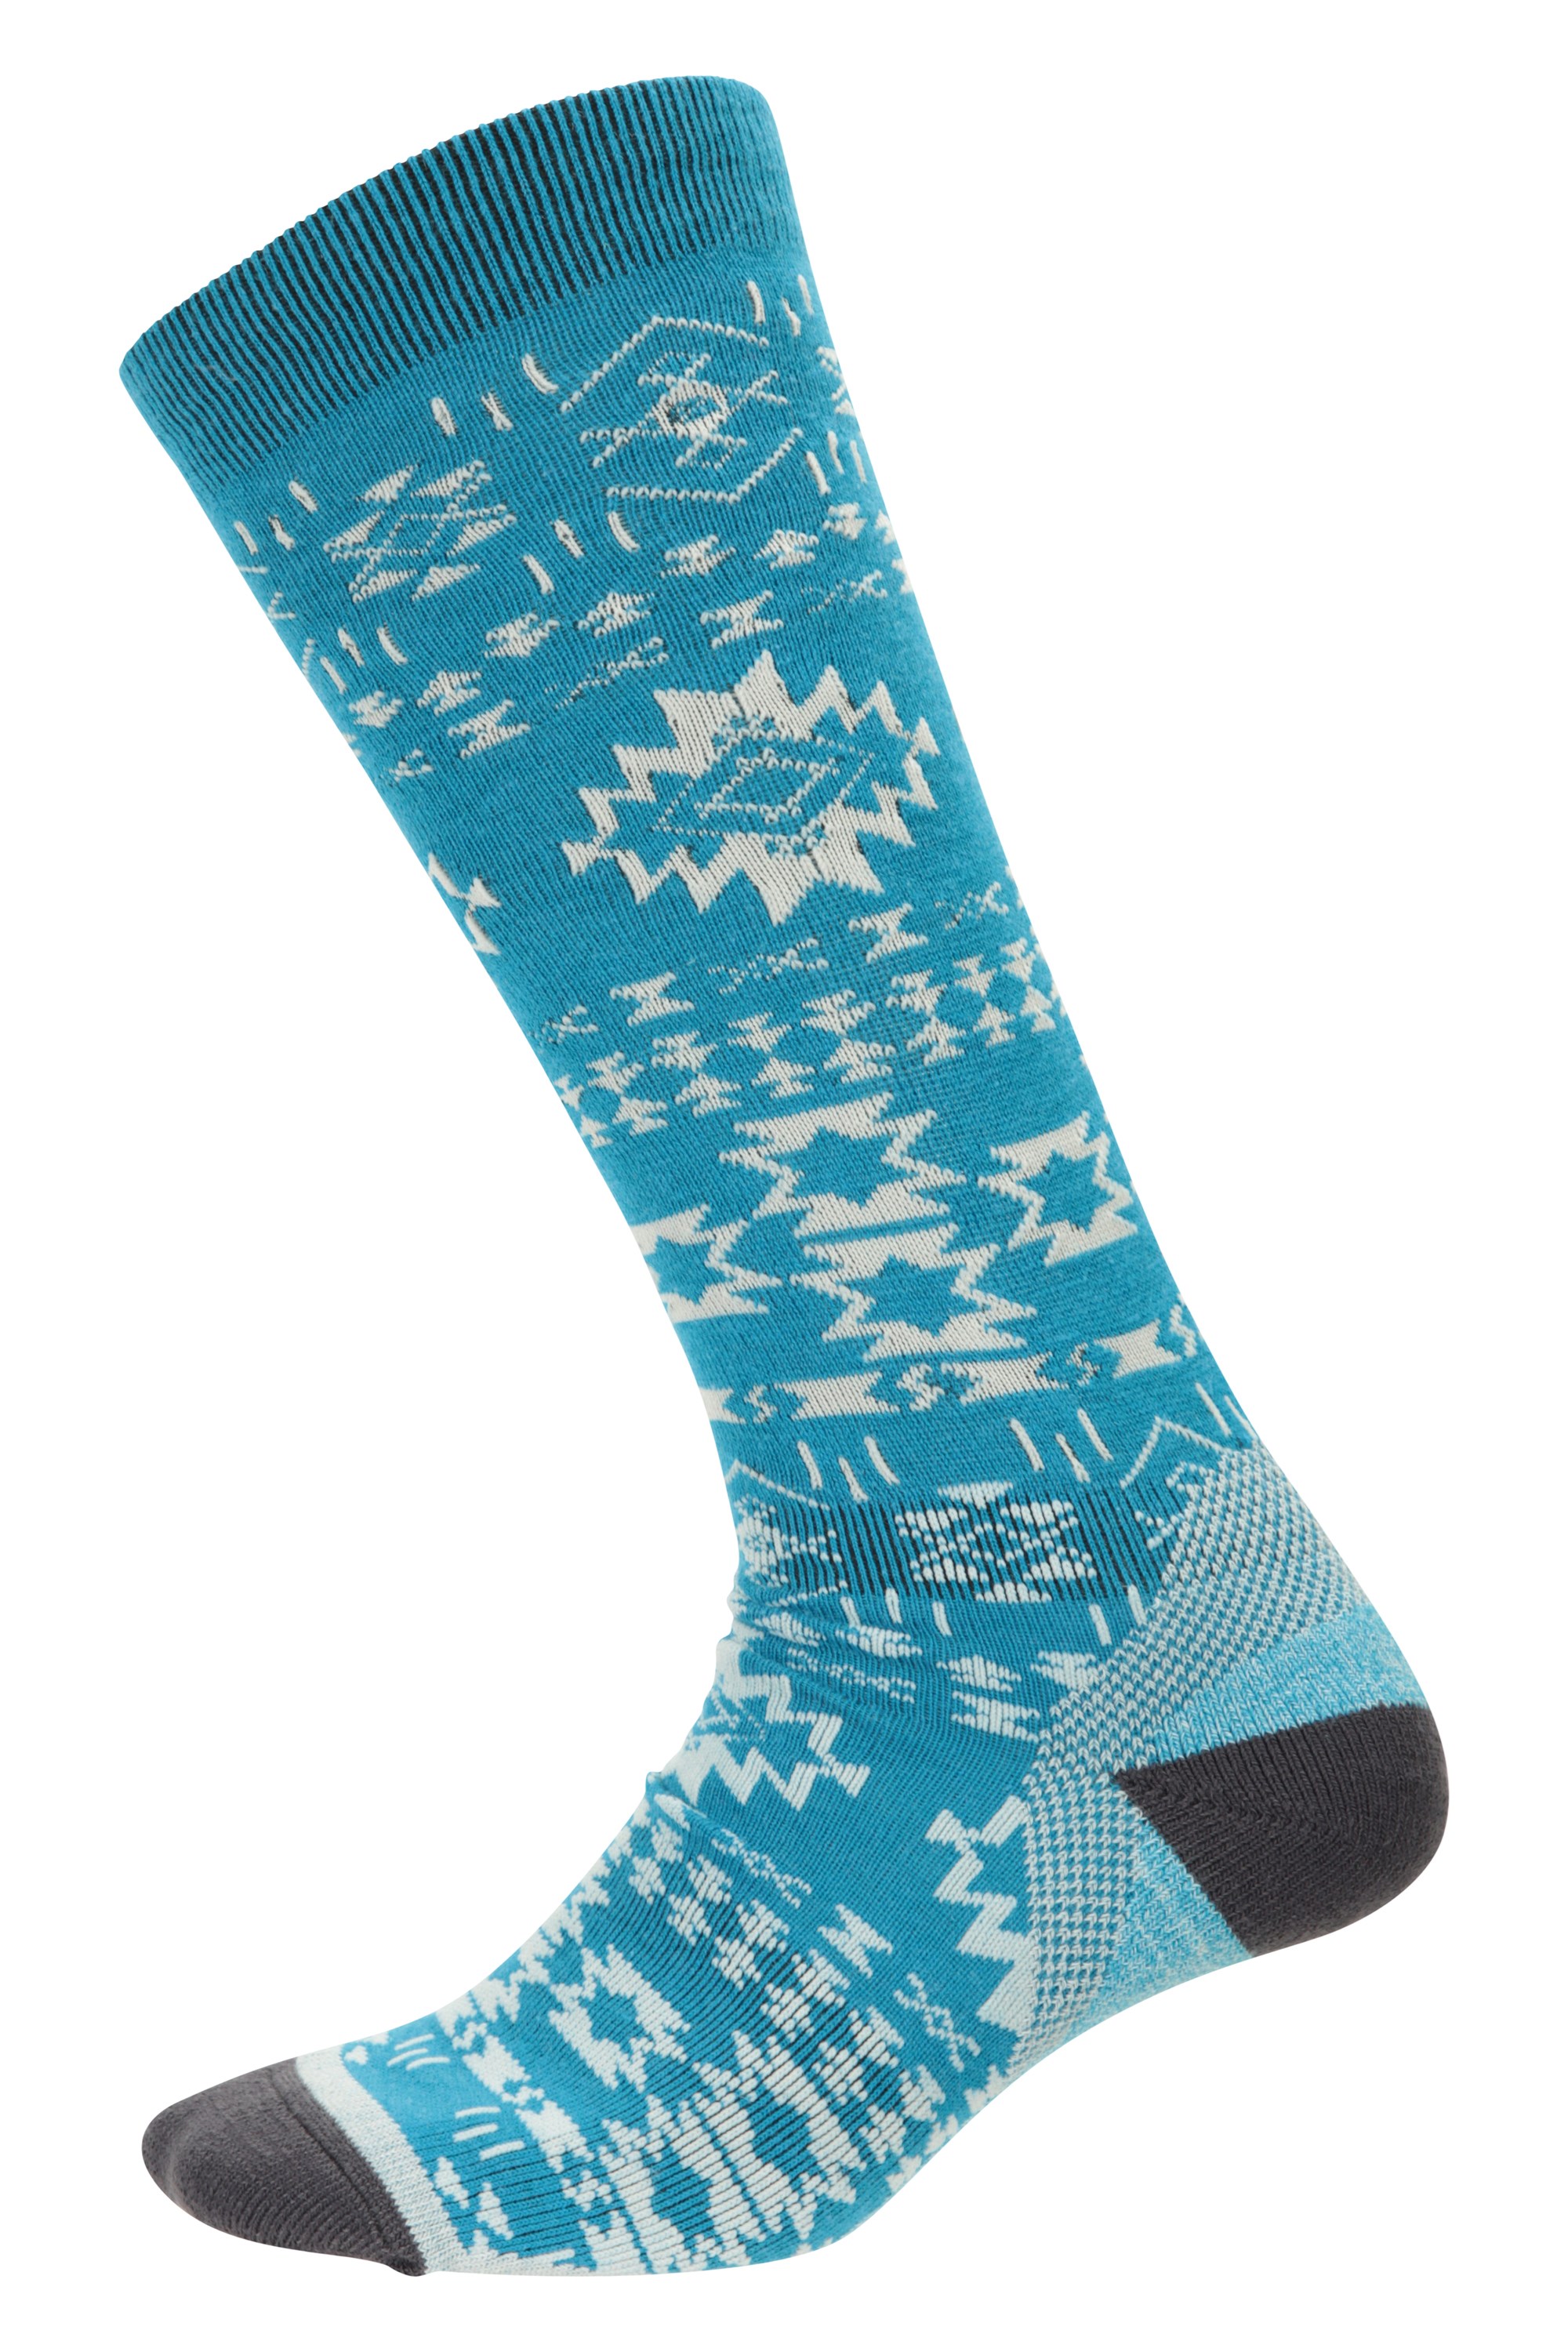 Mountain Warehouse Ski Kids Socks Embroidery Tube Socks Warm Winter Socks